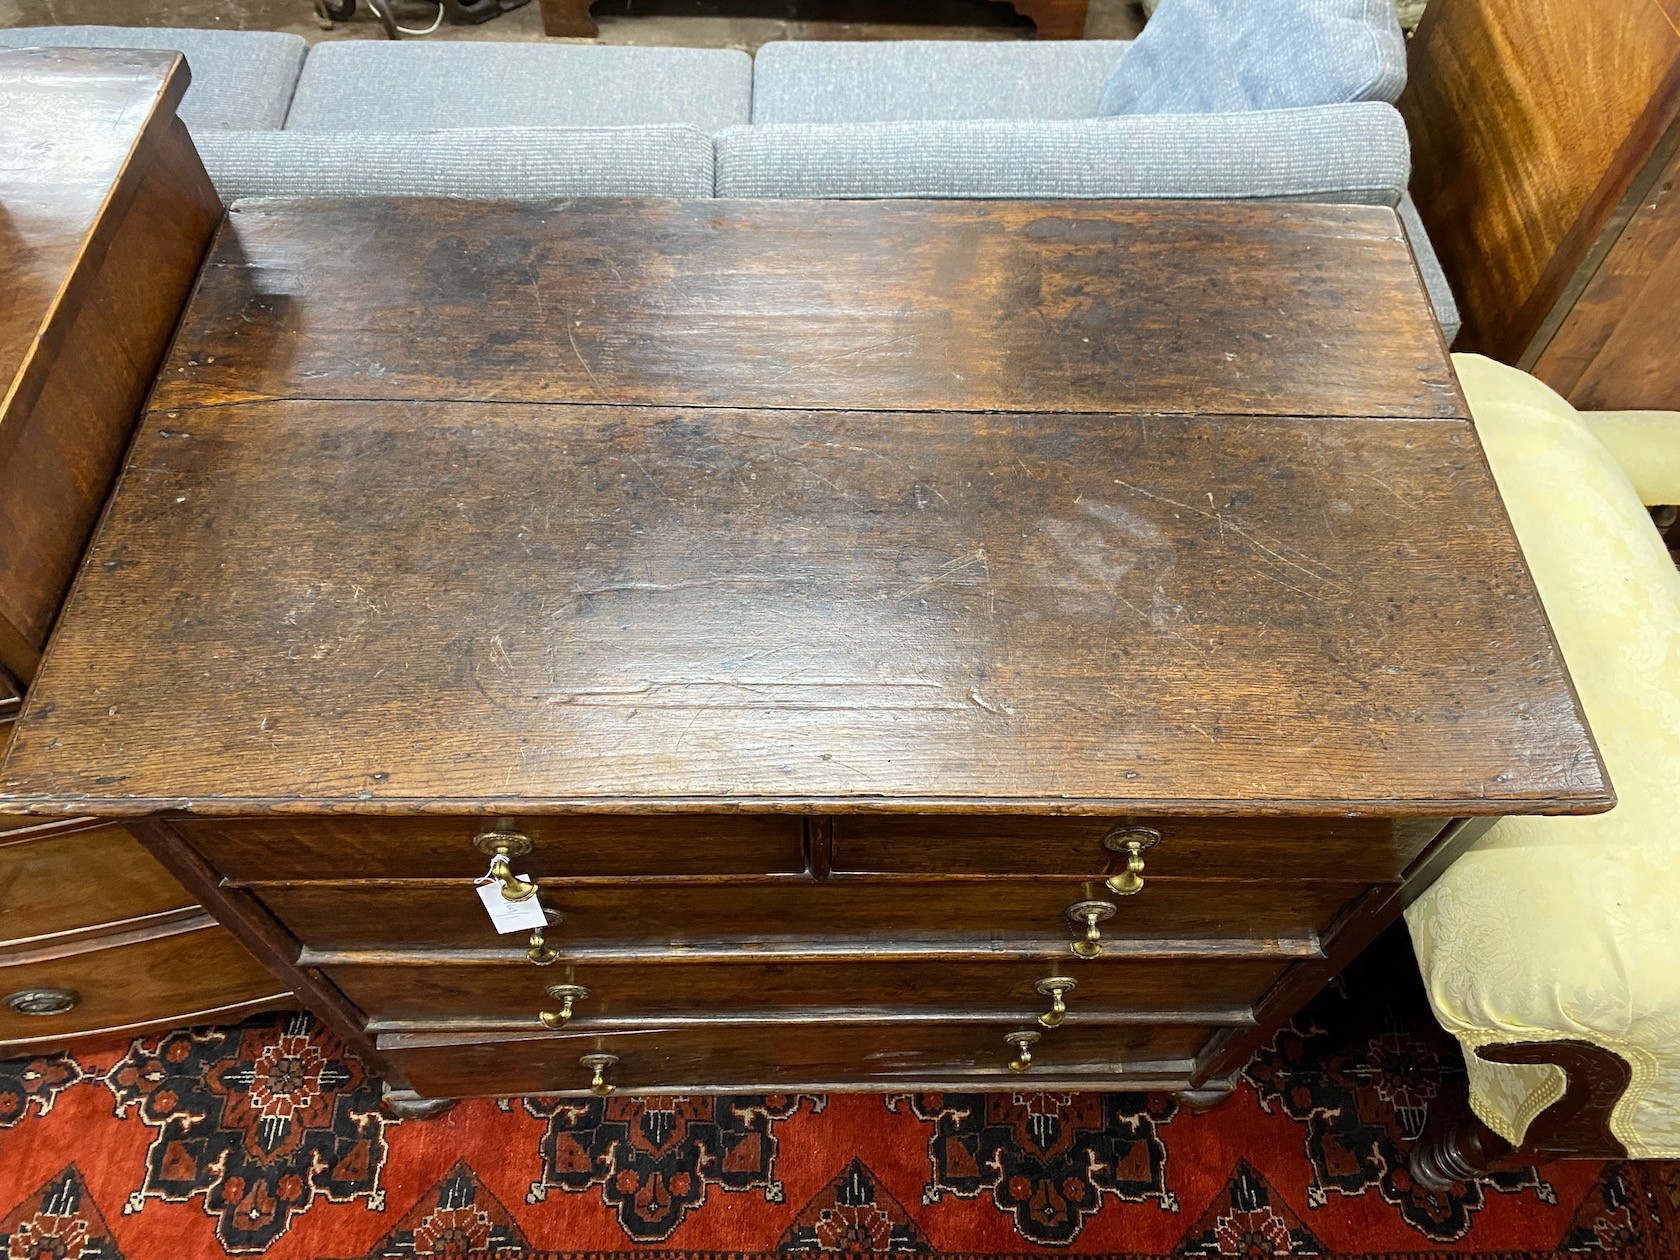 An 18th century oak chest, width 100cm, depth 57cm, height 85cm